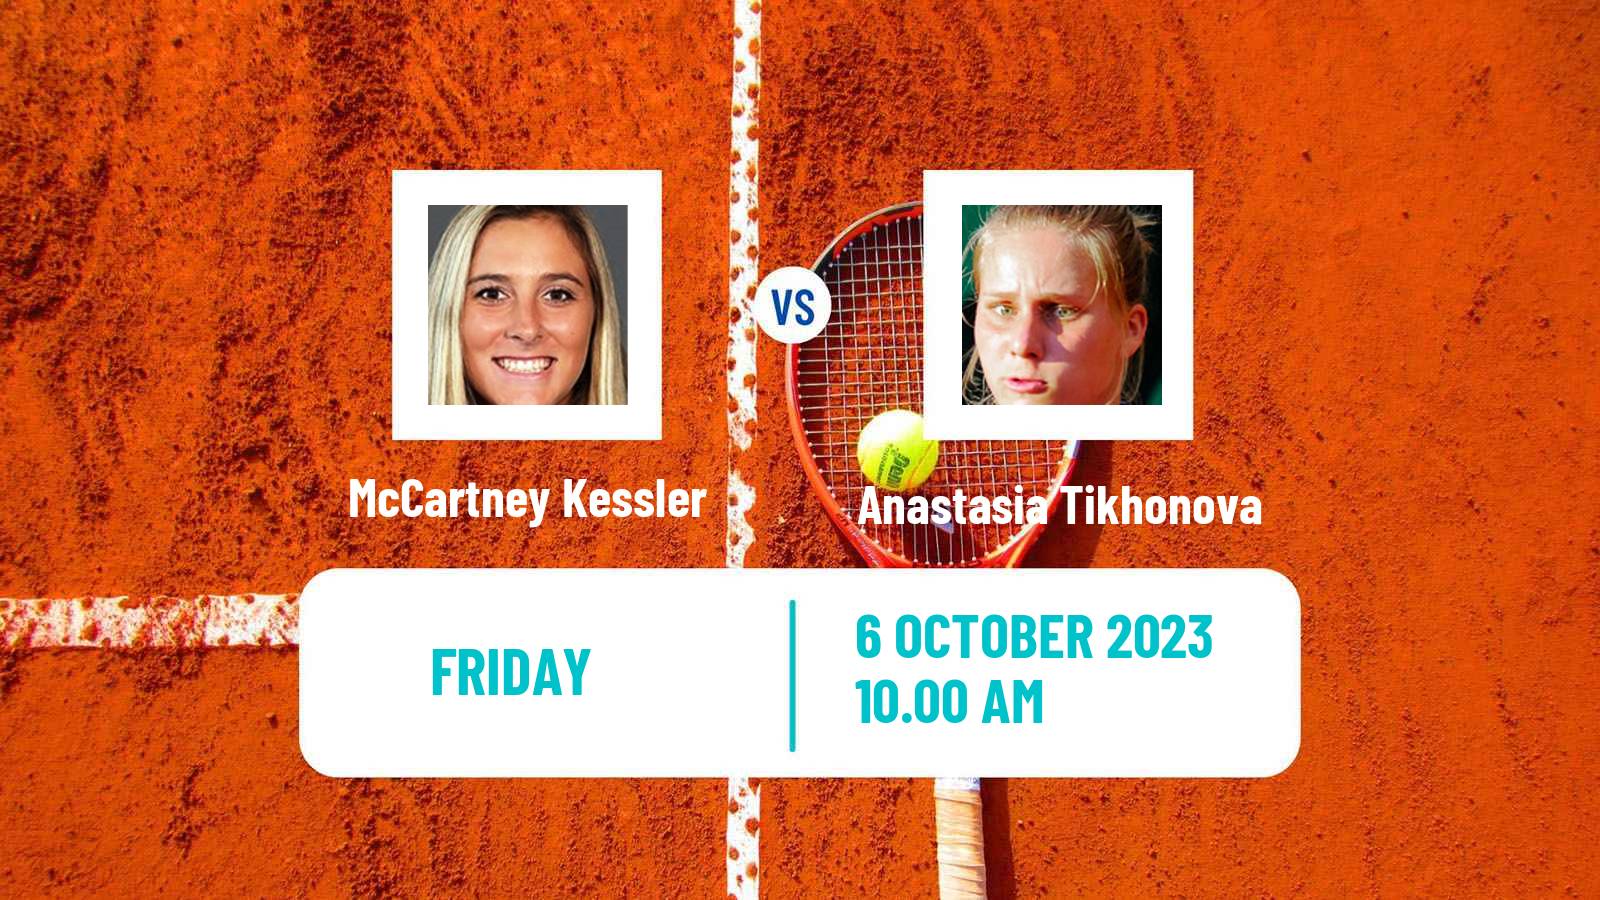 Tennis ITF W60 Rome Ga 2 Women McCartney Kessler - Anastasia Tikhonova